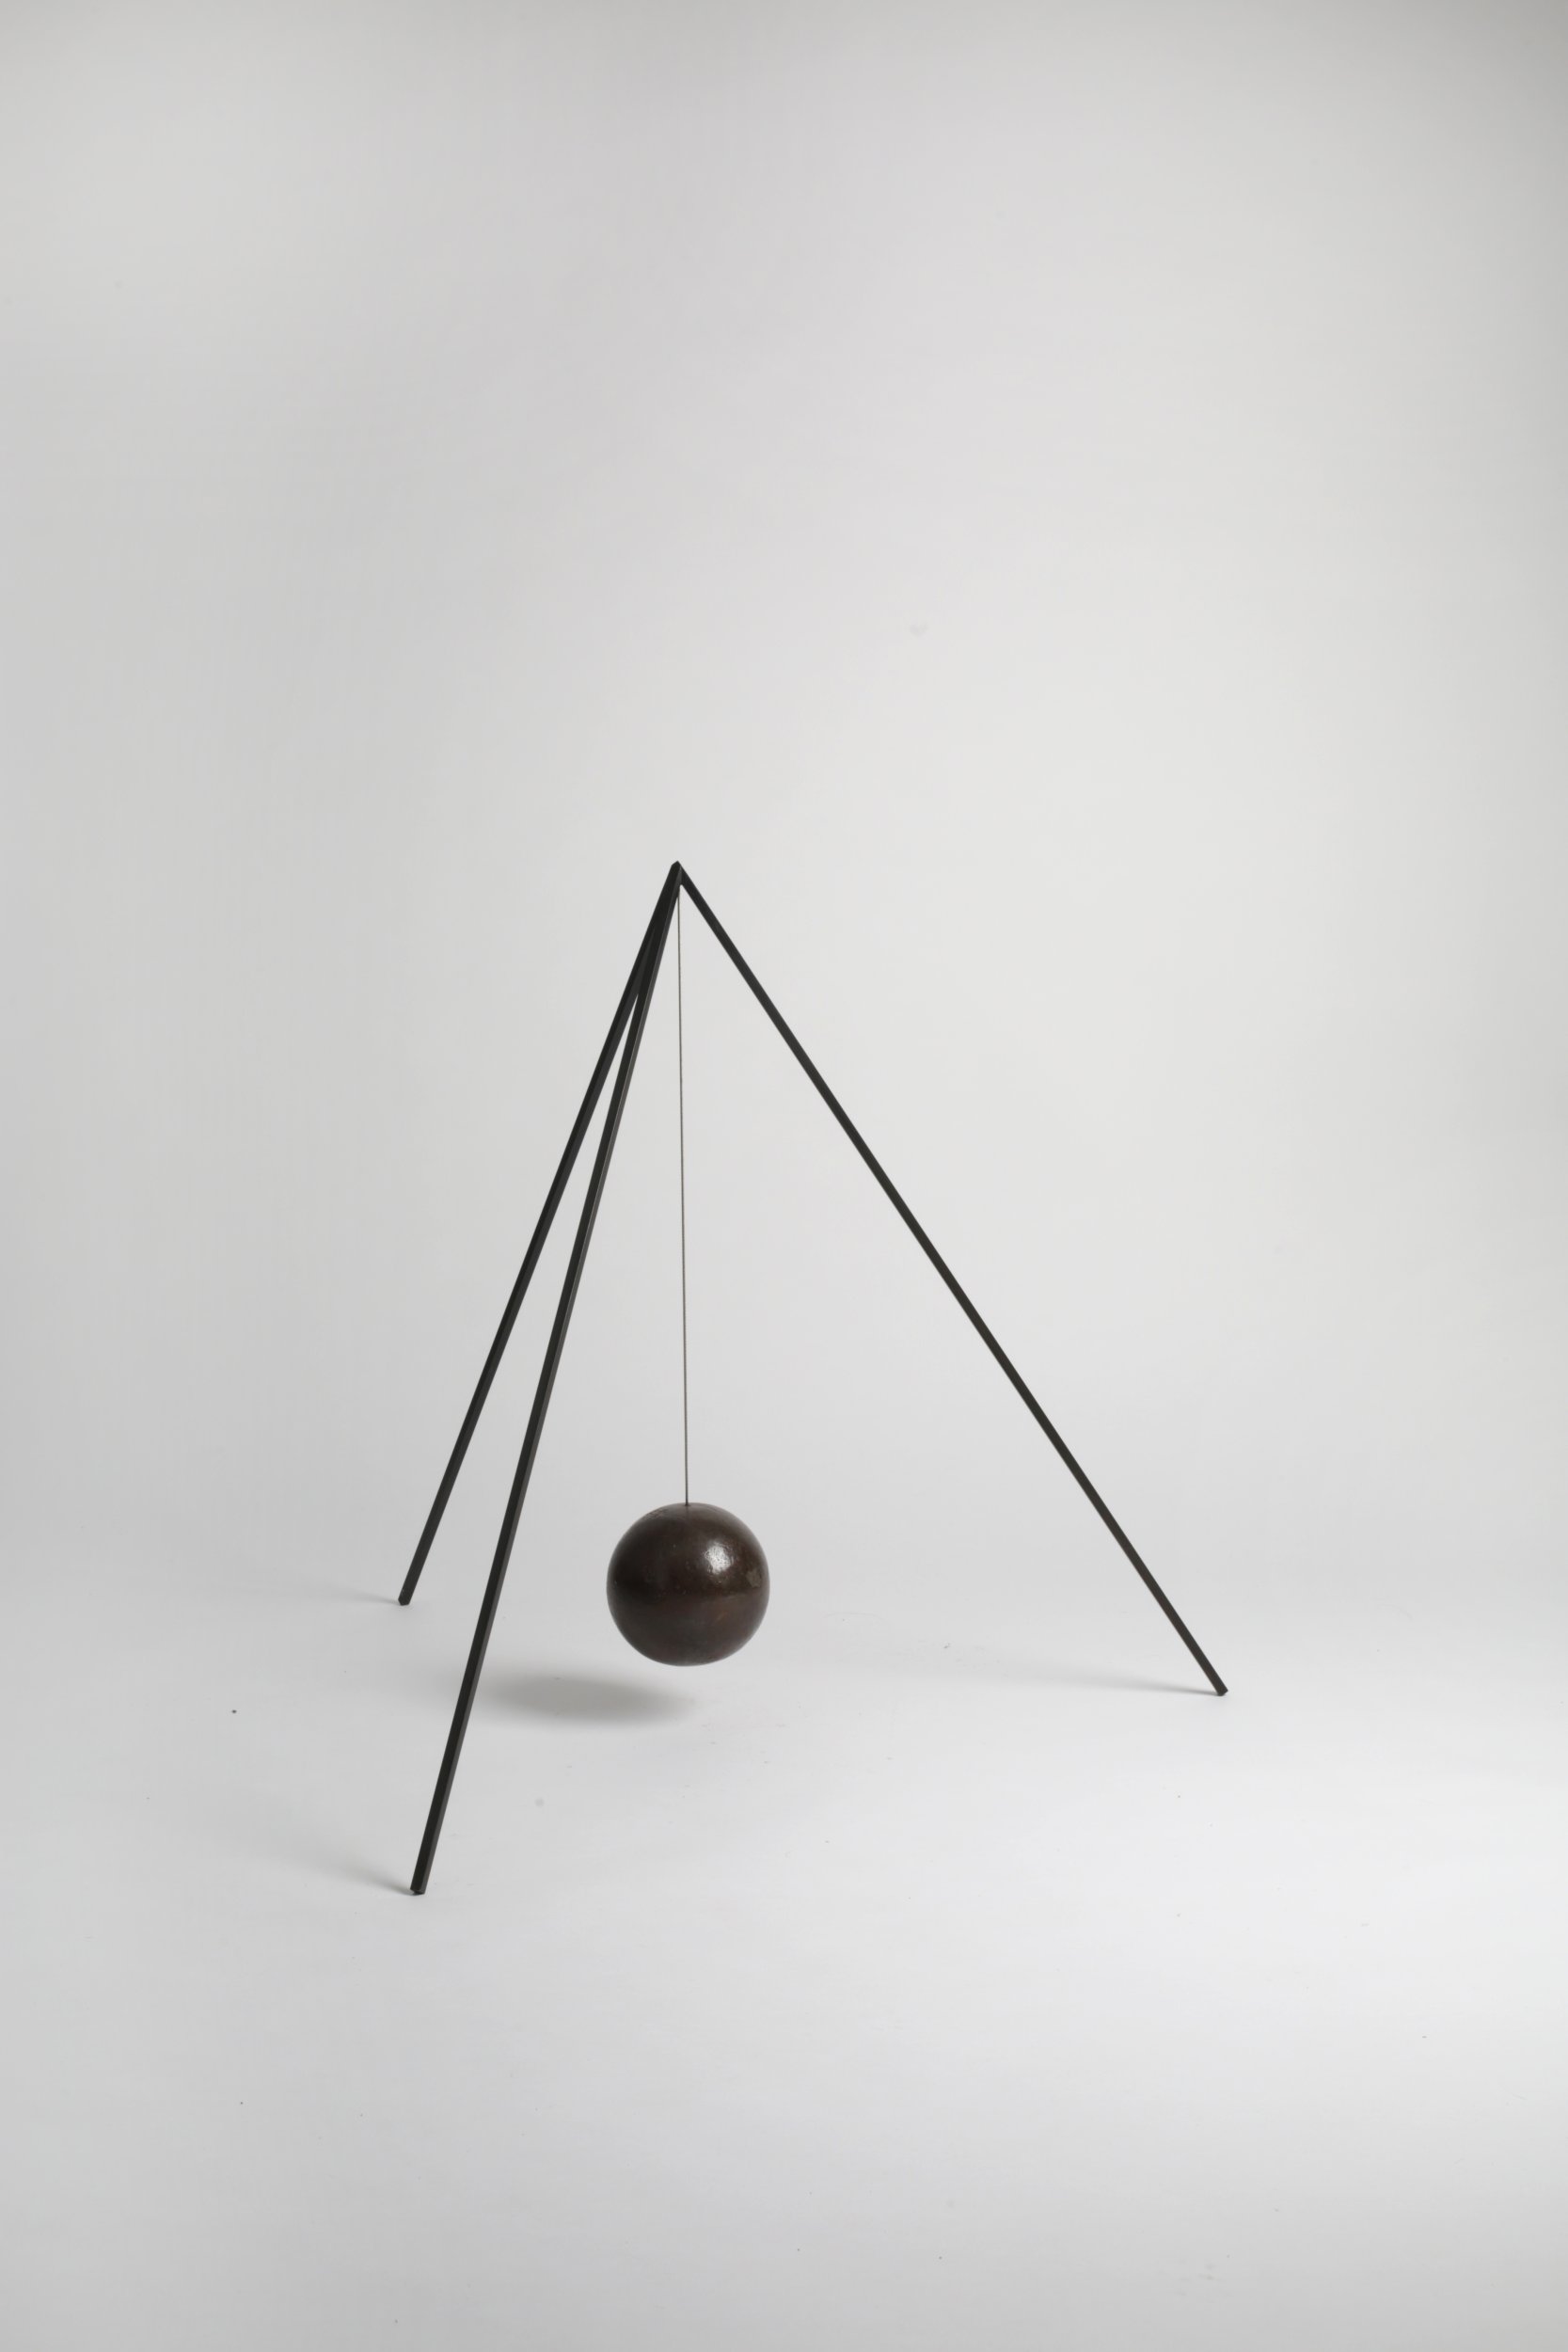 Daniel Gustav Cramer, LXXXIII, 2022. Found cast iron sphere, metal tripod, wire, burnished. 66 x 66 x 76 cm, ø 14 cm. Unique
